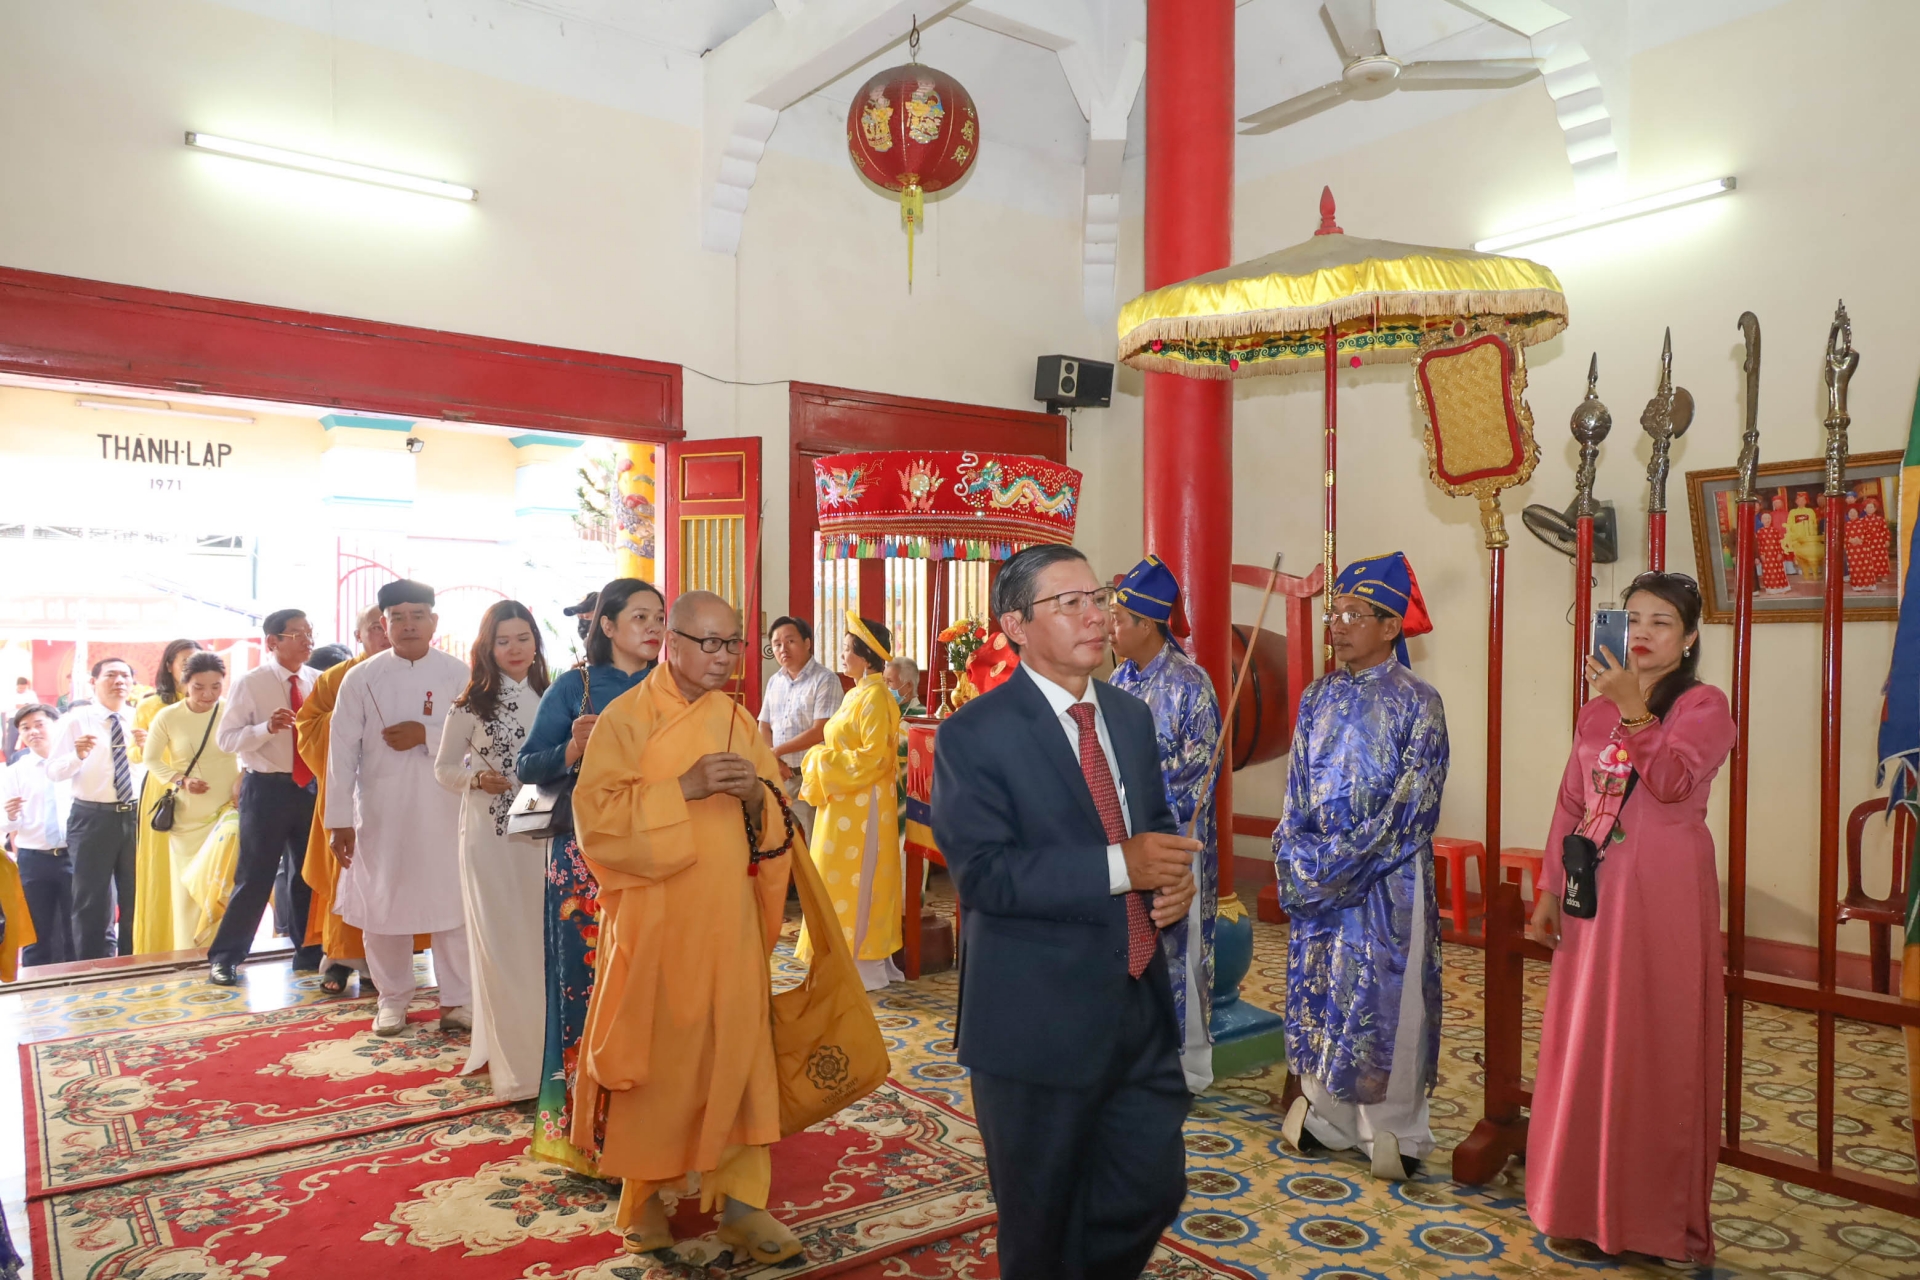 Tran Ngoc Thanh offers incense at Hung Kings’ Temple

